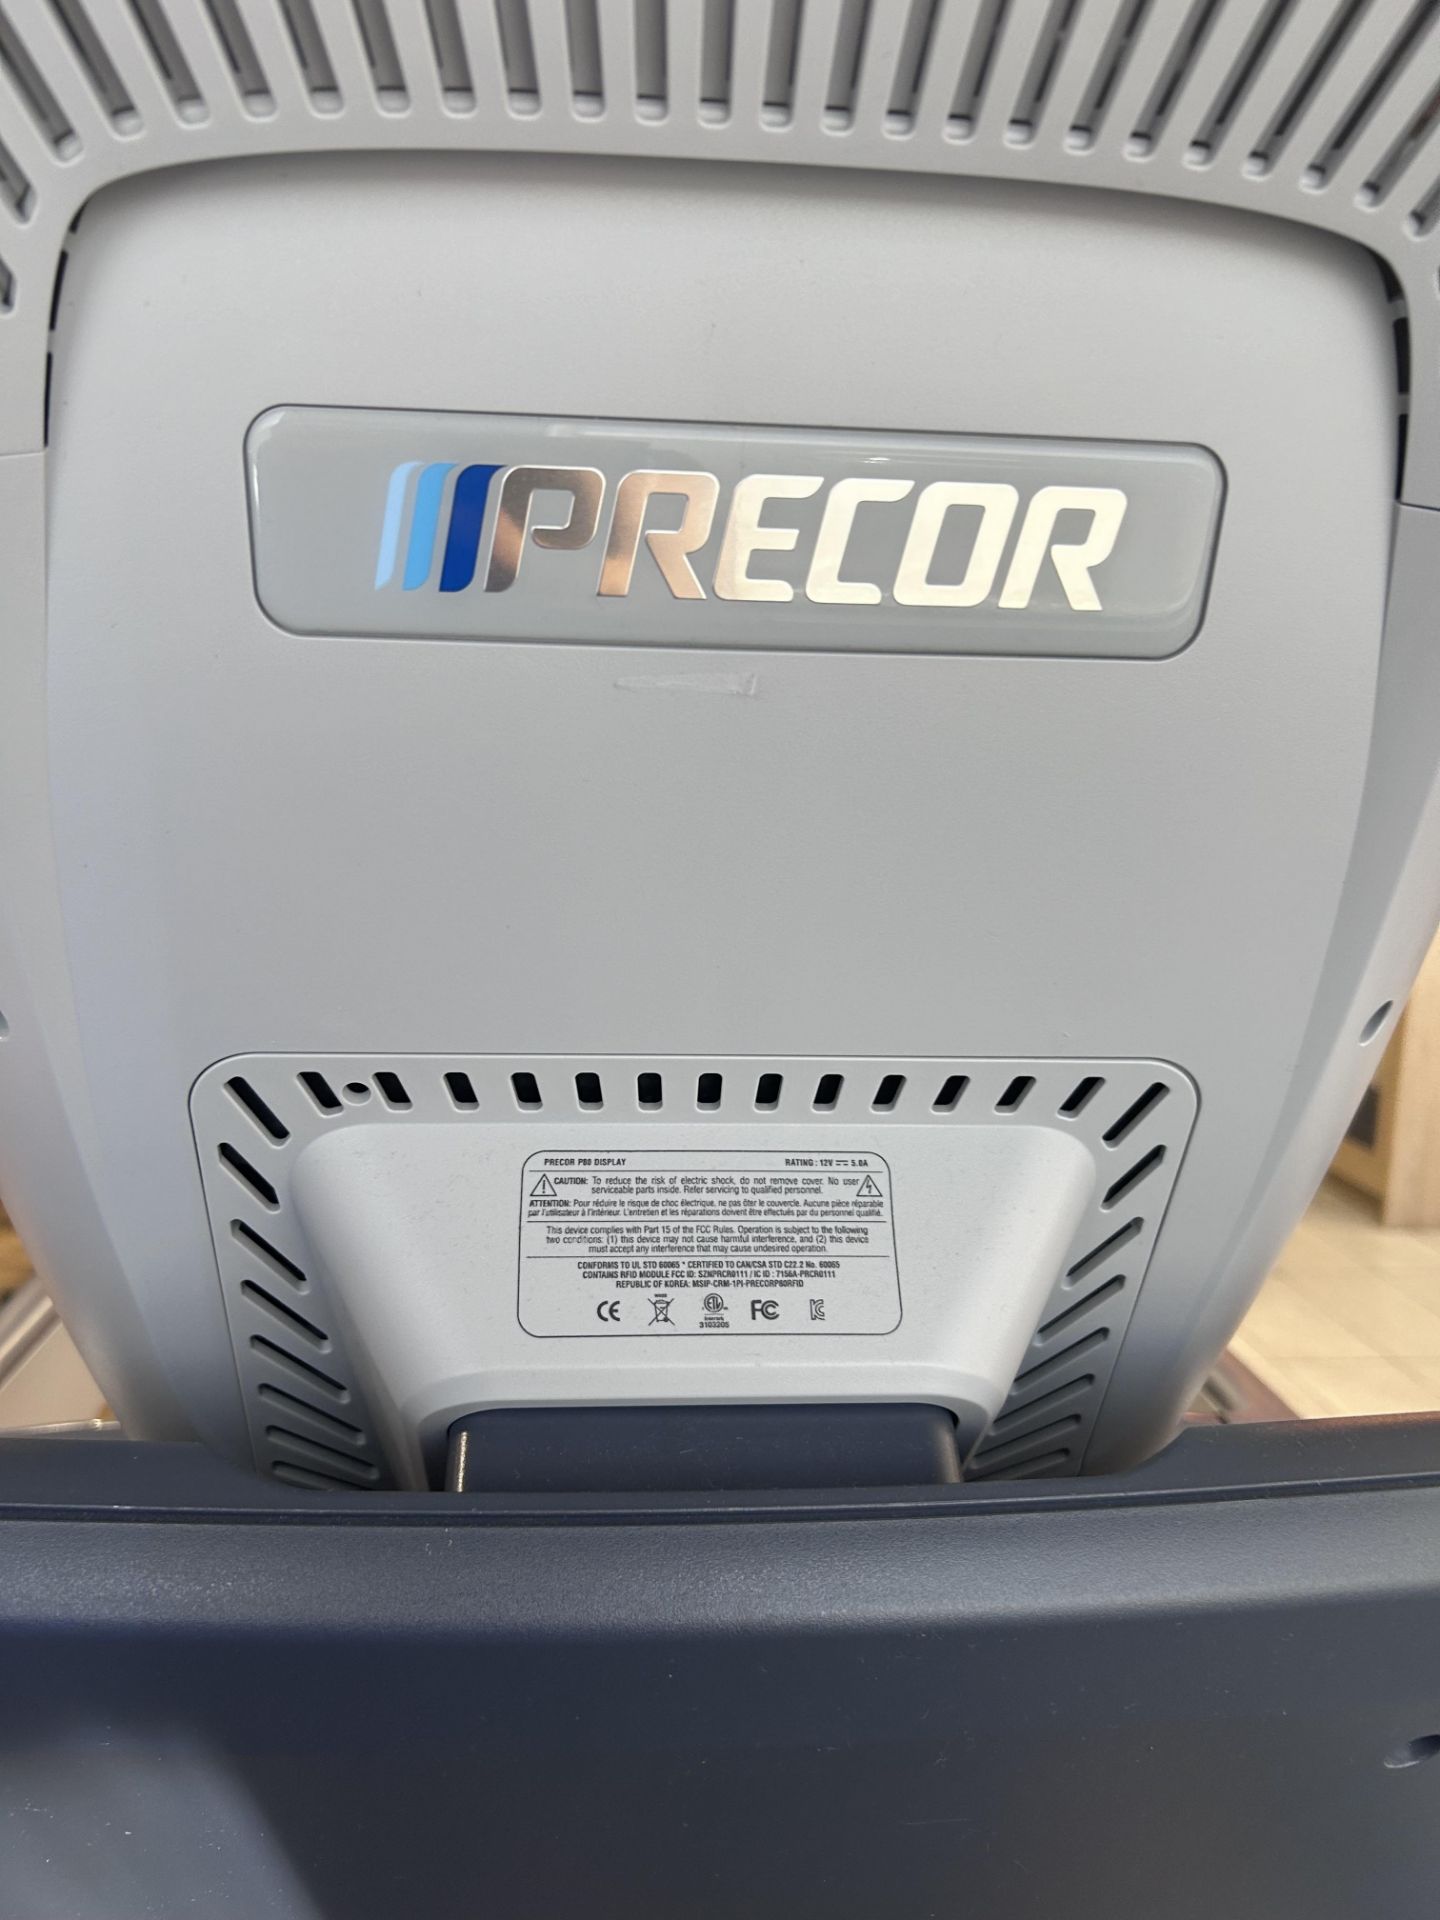 PRECOR mod. TRM 811 Treadmill with PRECOR P80 Display Console, ser. AGNBJ27140026 - Image 3 of 4